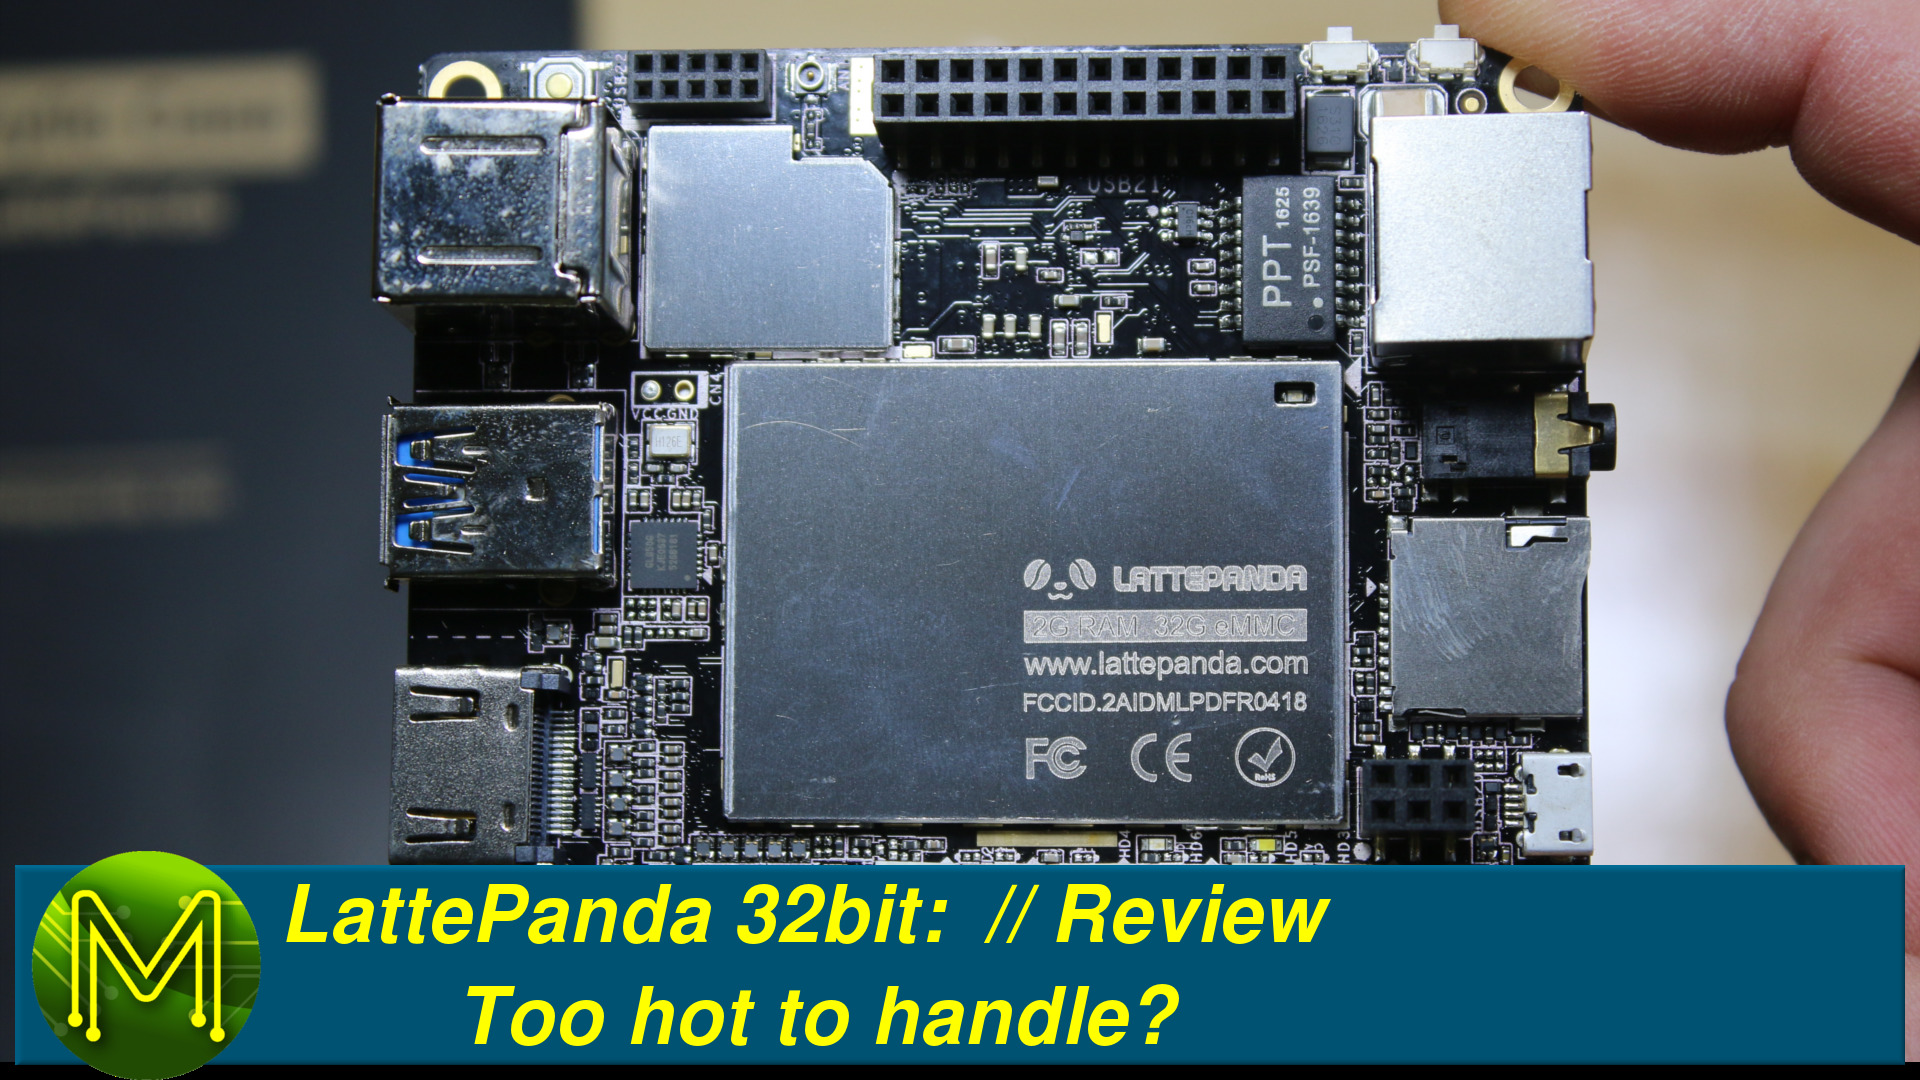 LattePanda 32bit: Too hot to handle? // Review